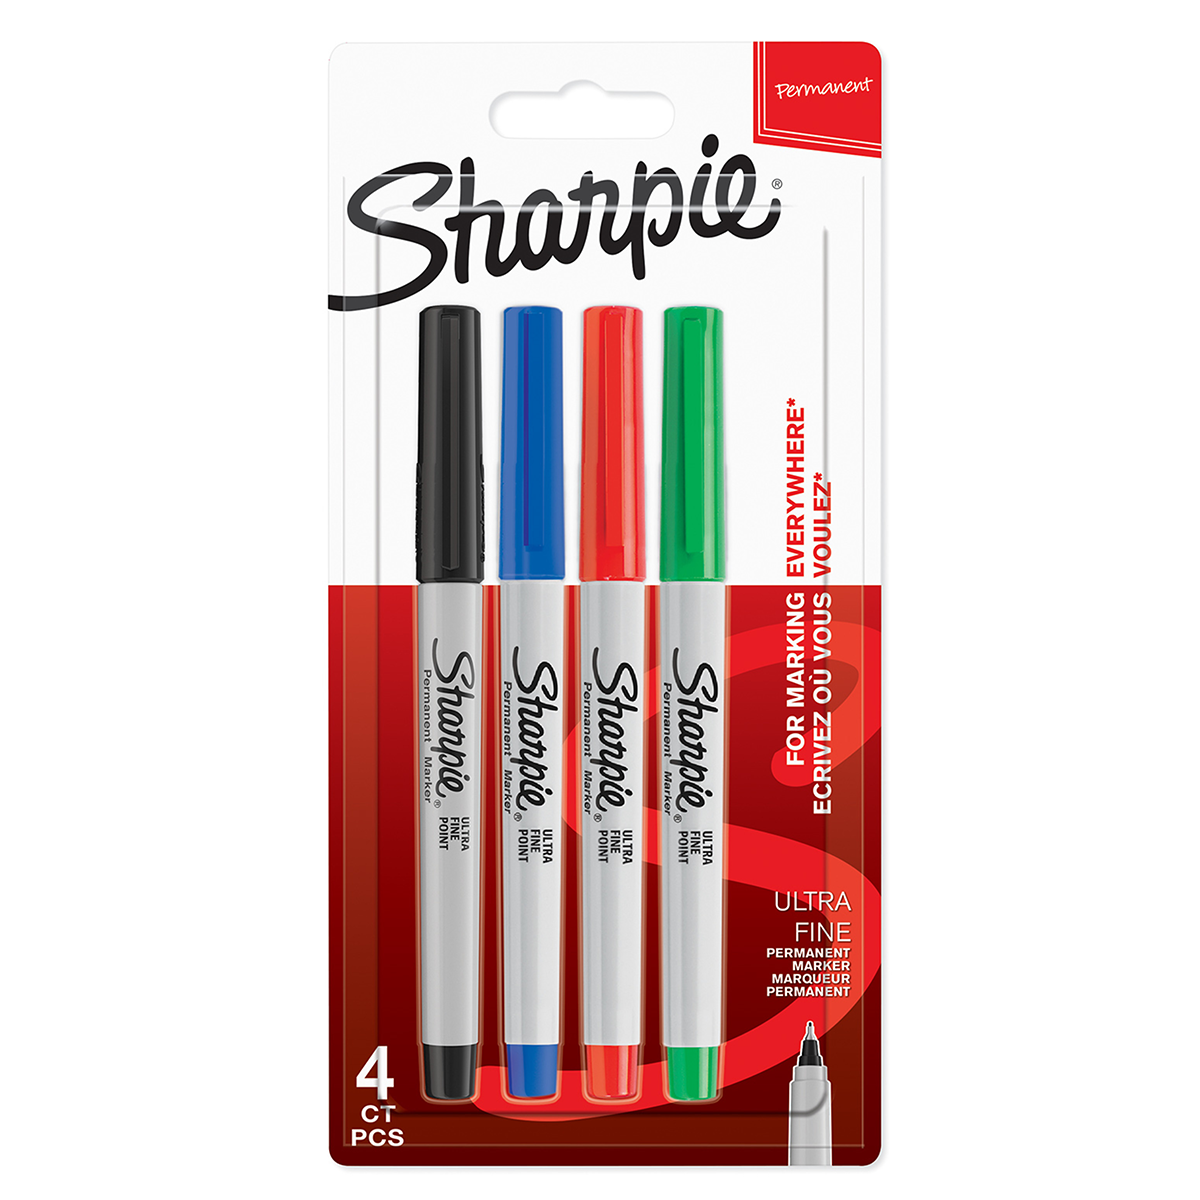 Sharpie Ultrafine Marker 4-pack